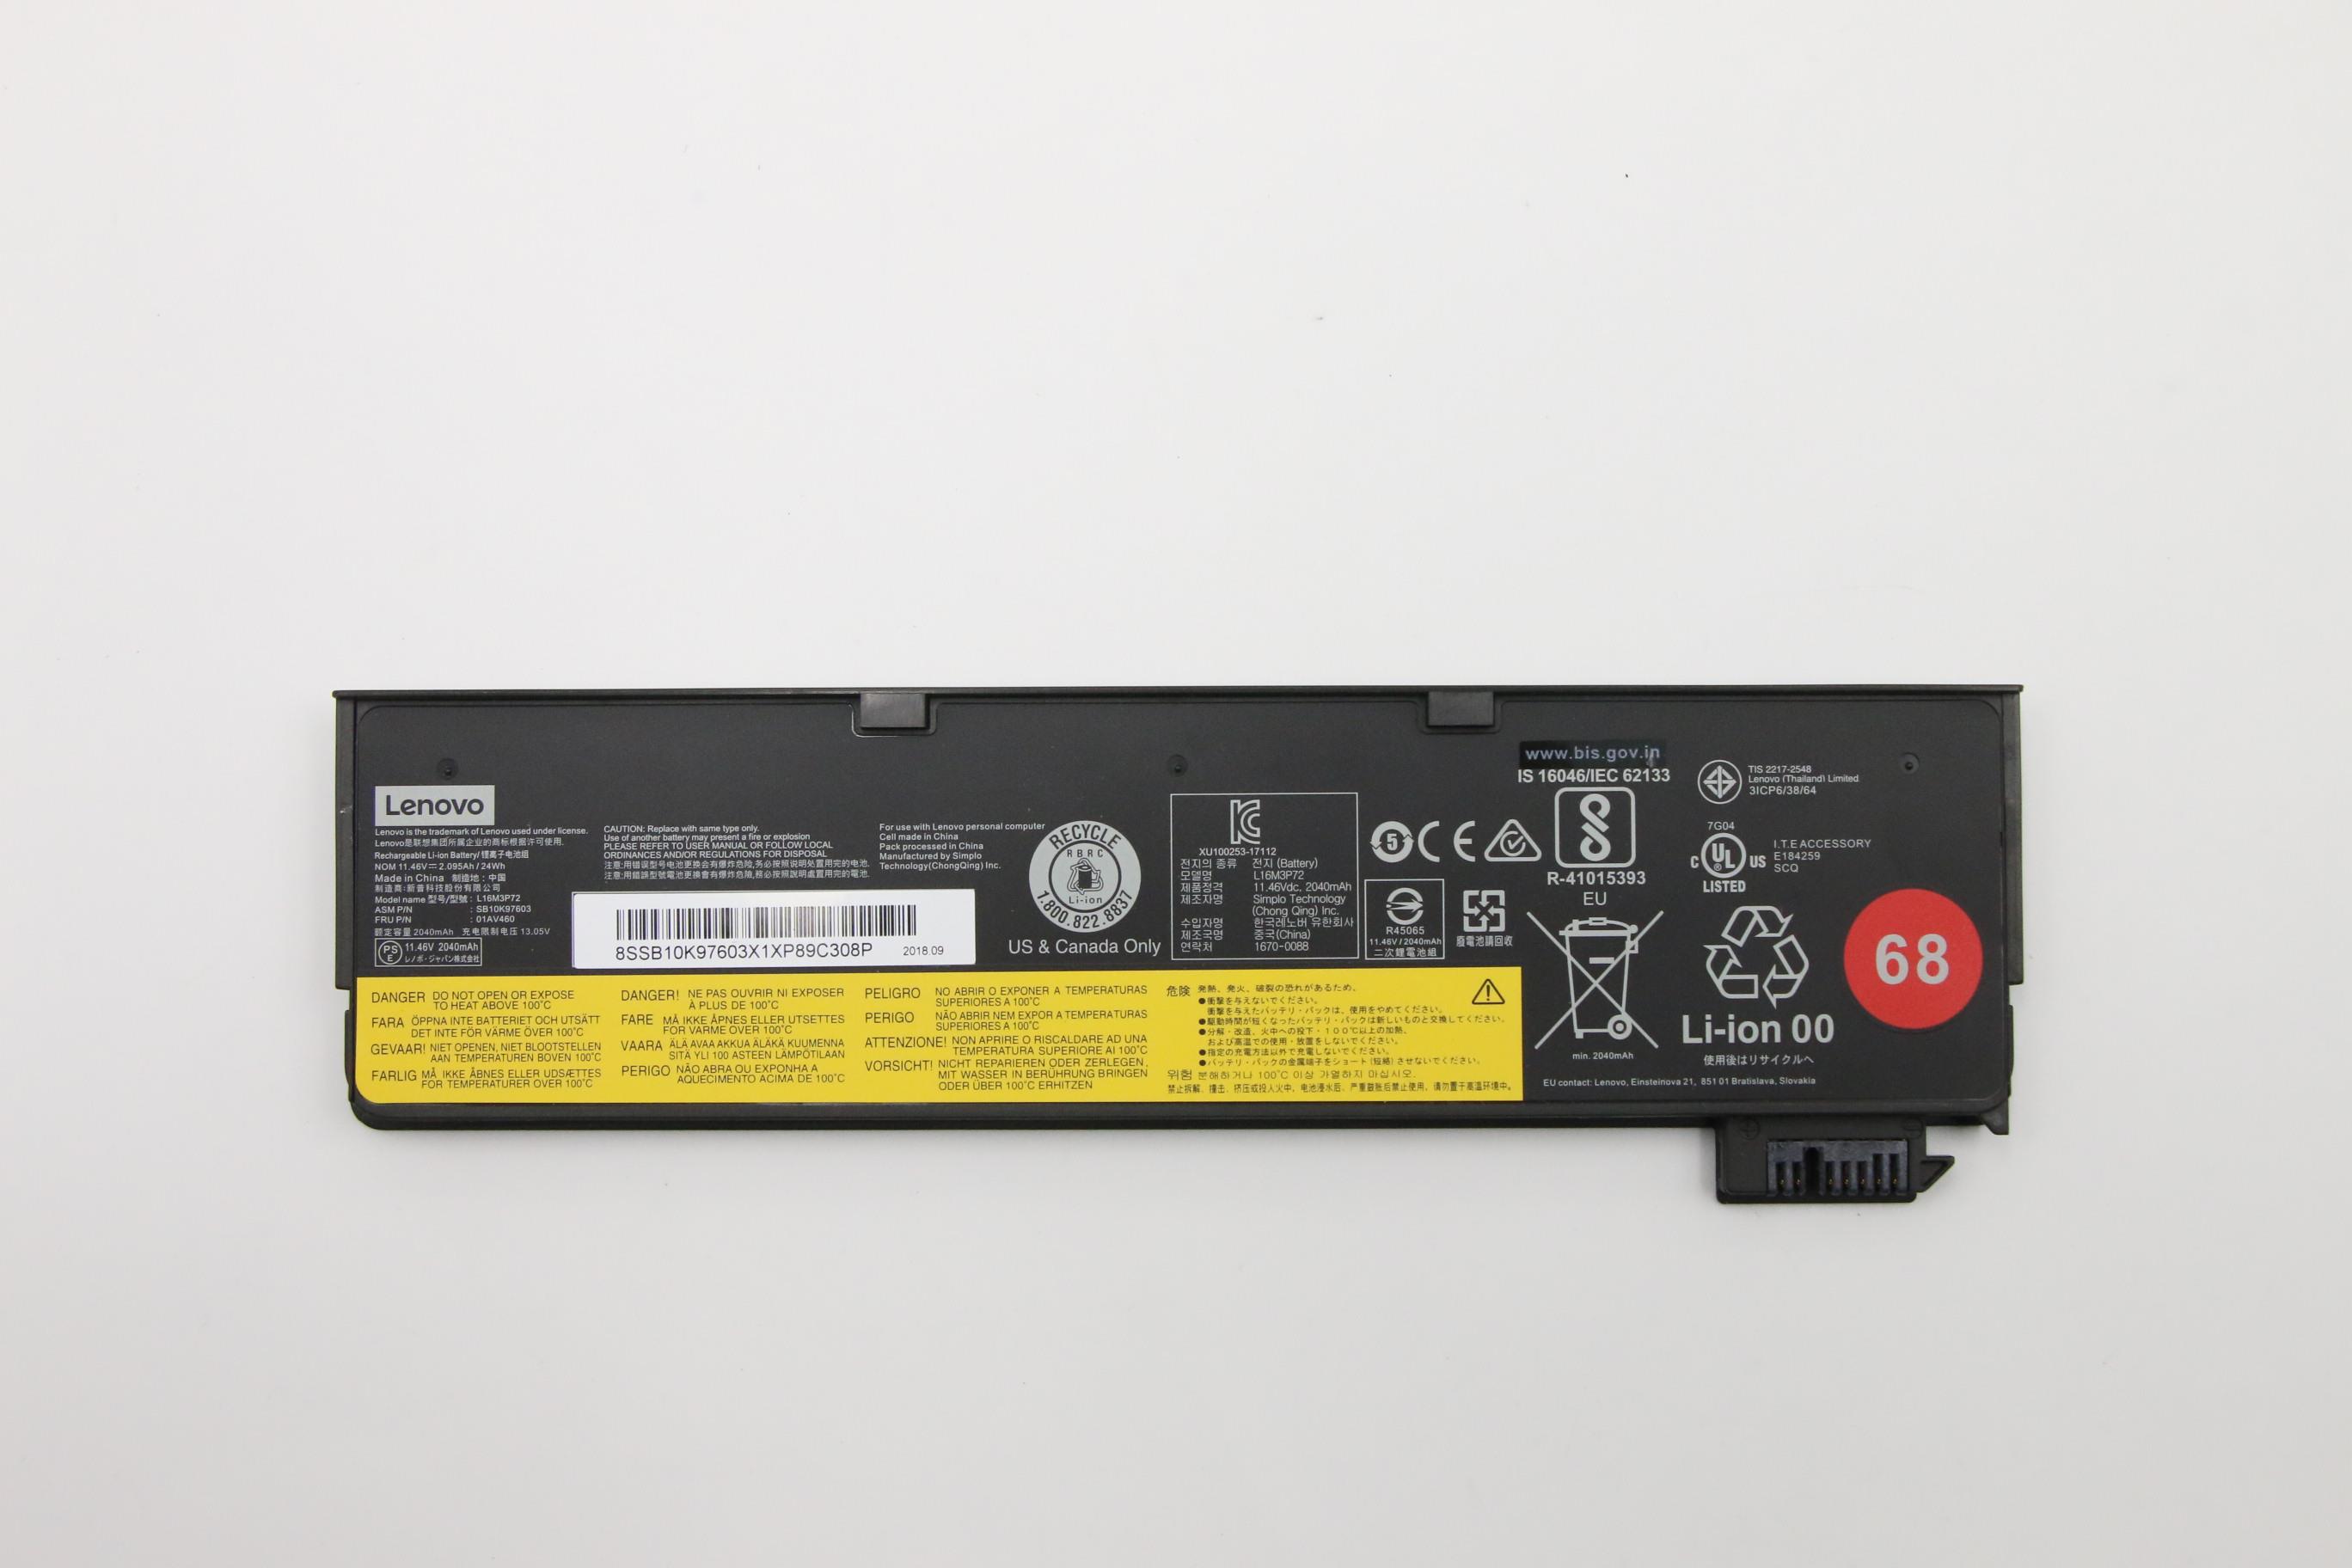 Lenovo ThinkPad T460p BATTERY - 01AV460